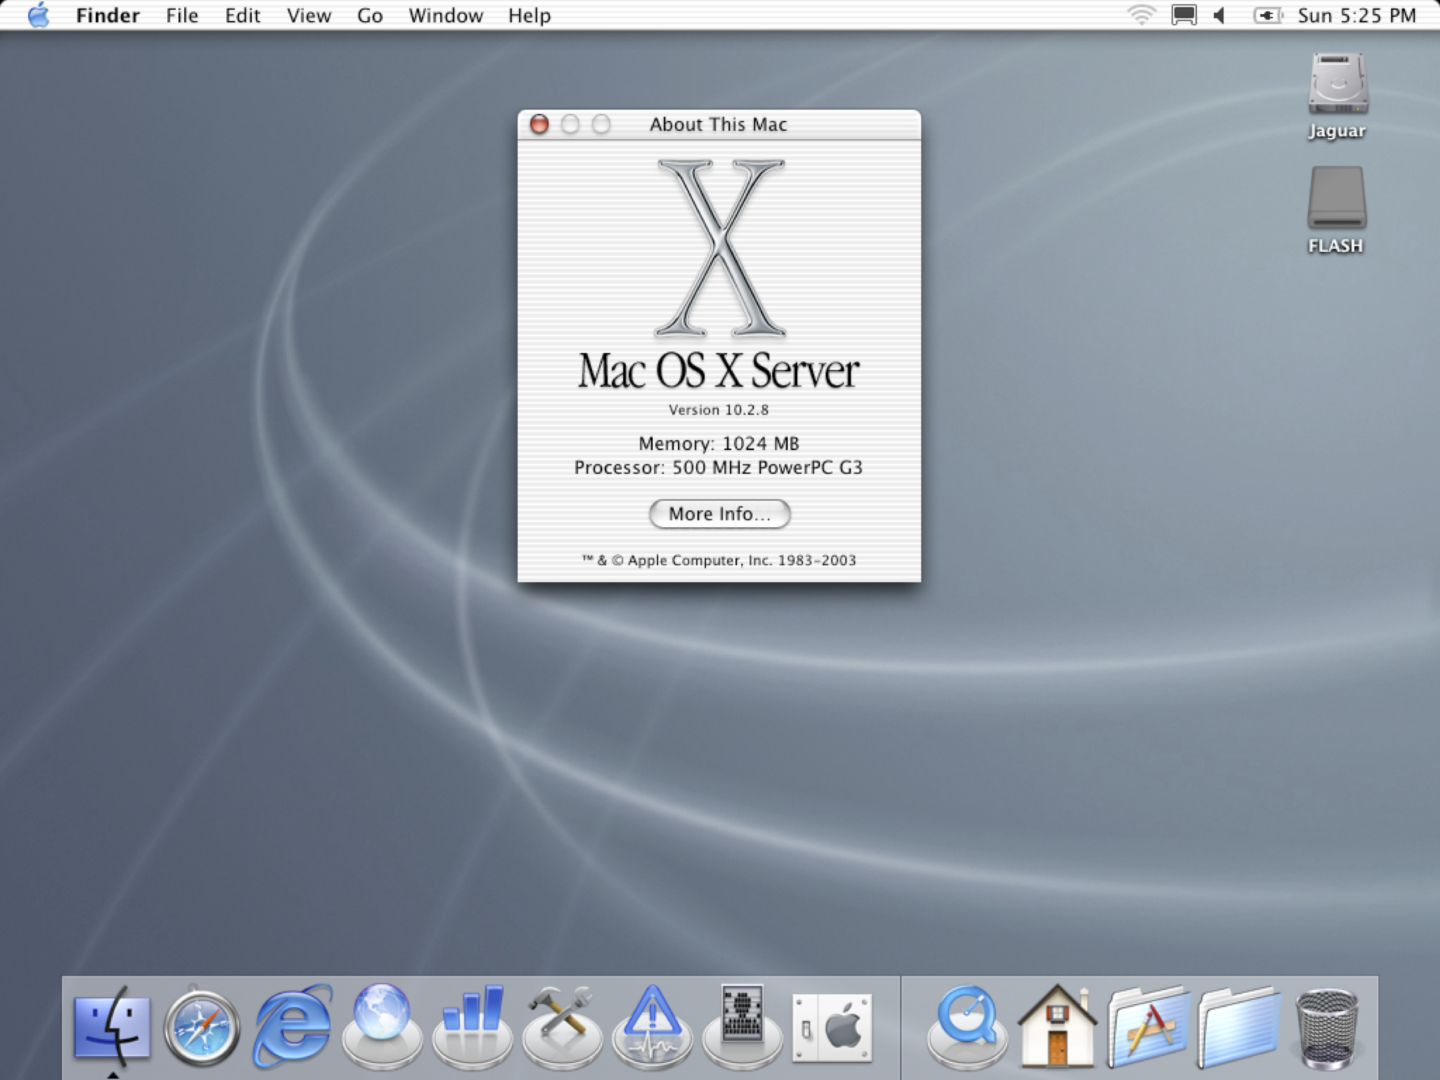 Macos support. Mac os x 10.2 Jaguar. Mac os x Server 10.2 (Jaguar Server). Mac os 2002. Mac os x Server 1.0.